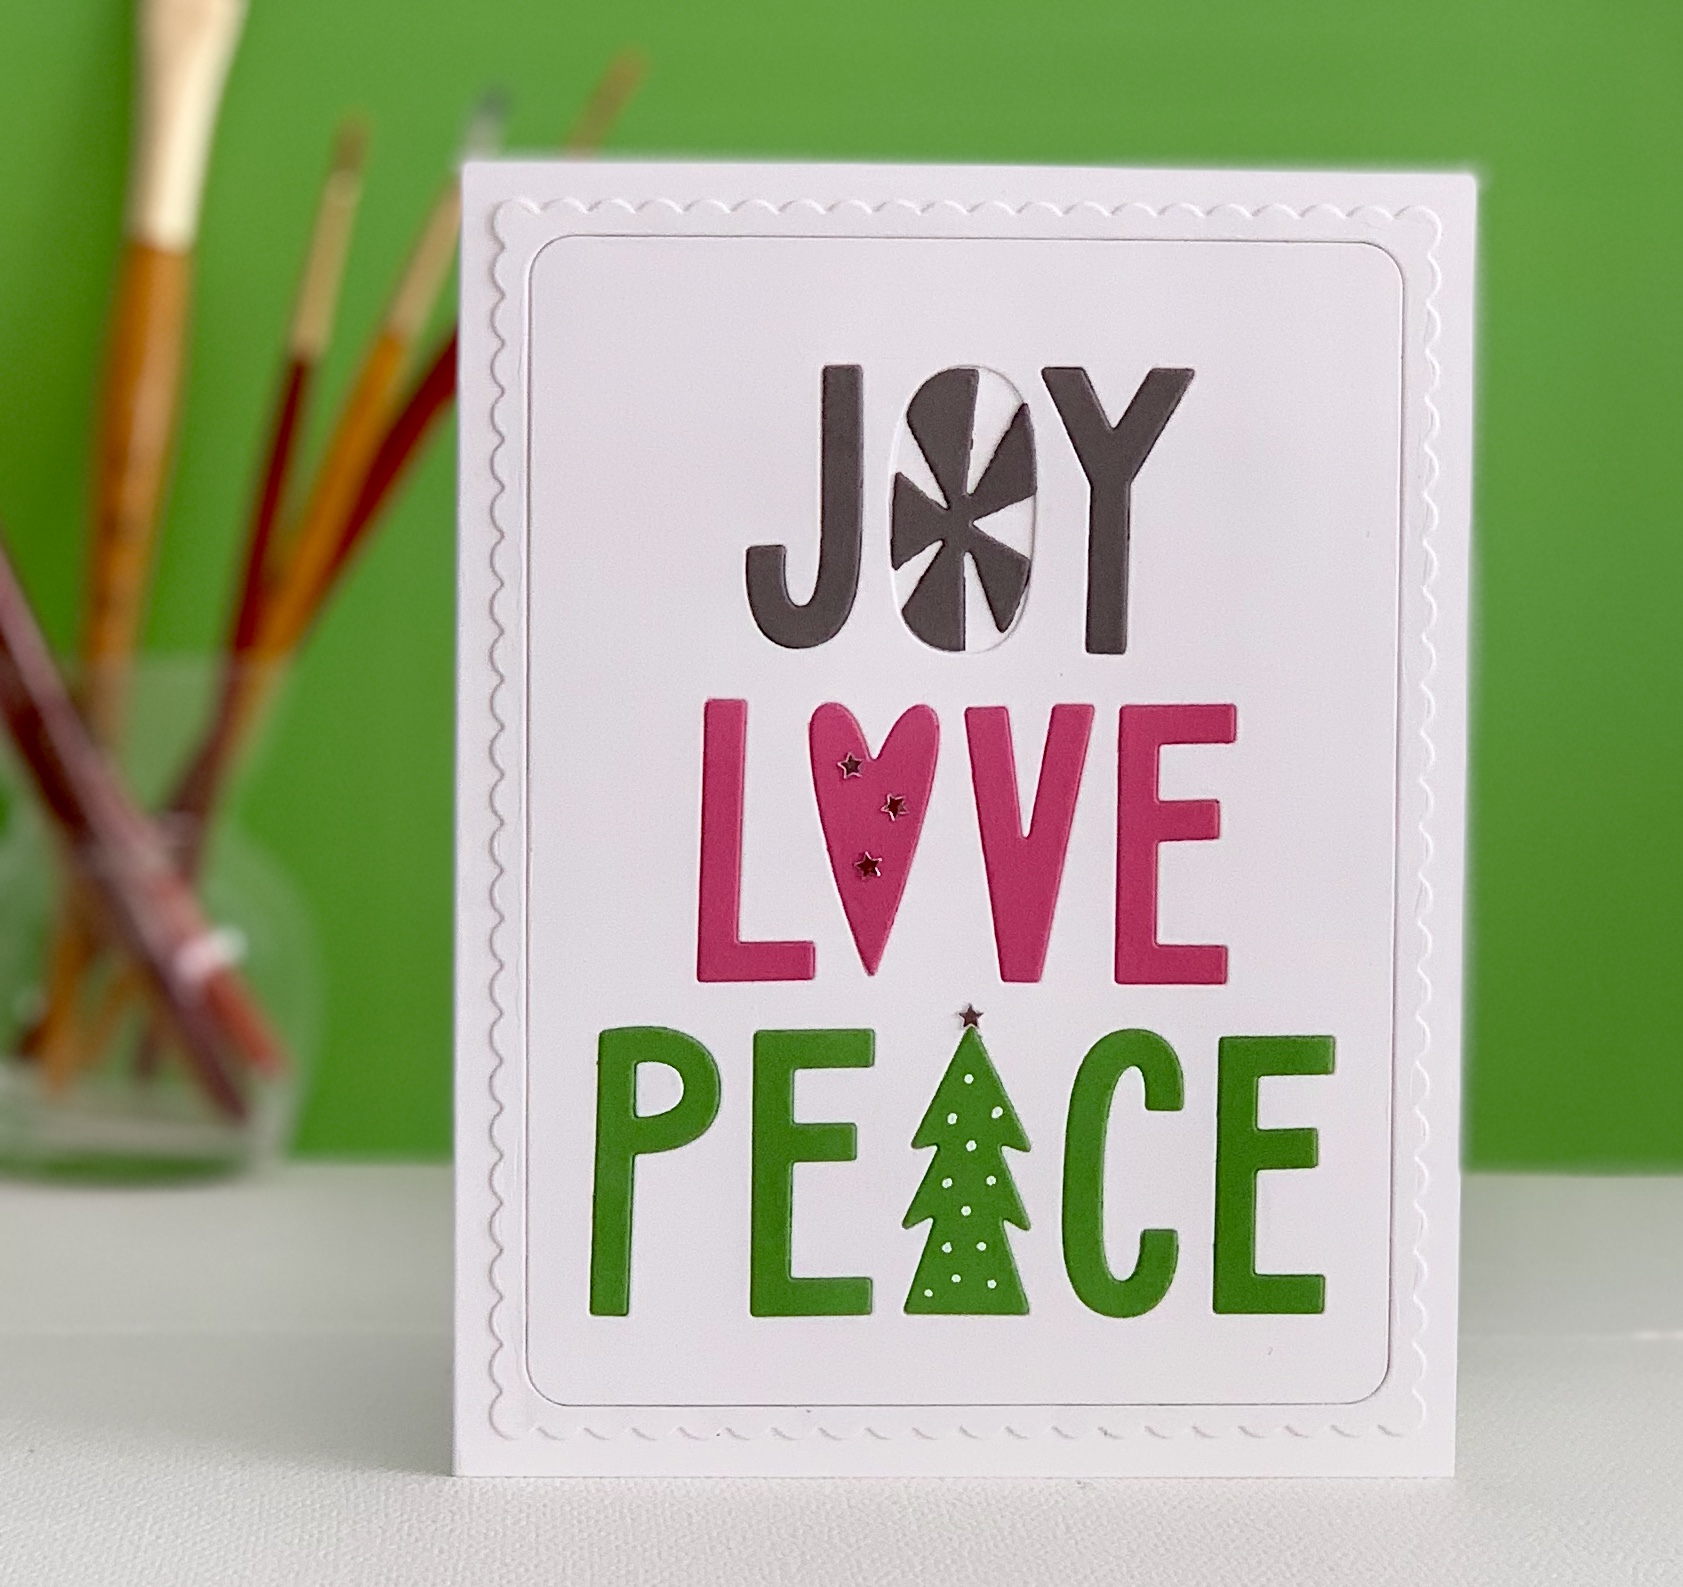 Example image of Joy Love Peace